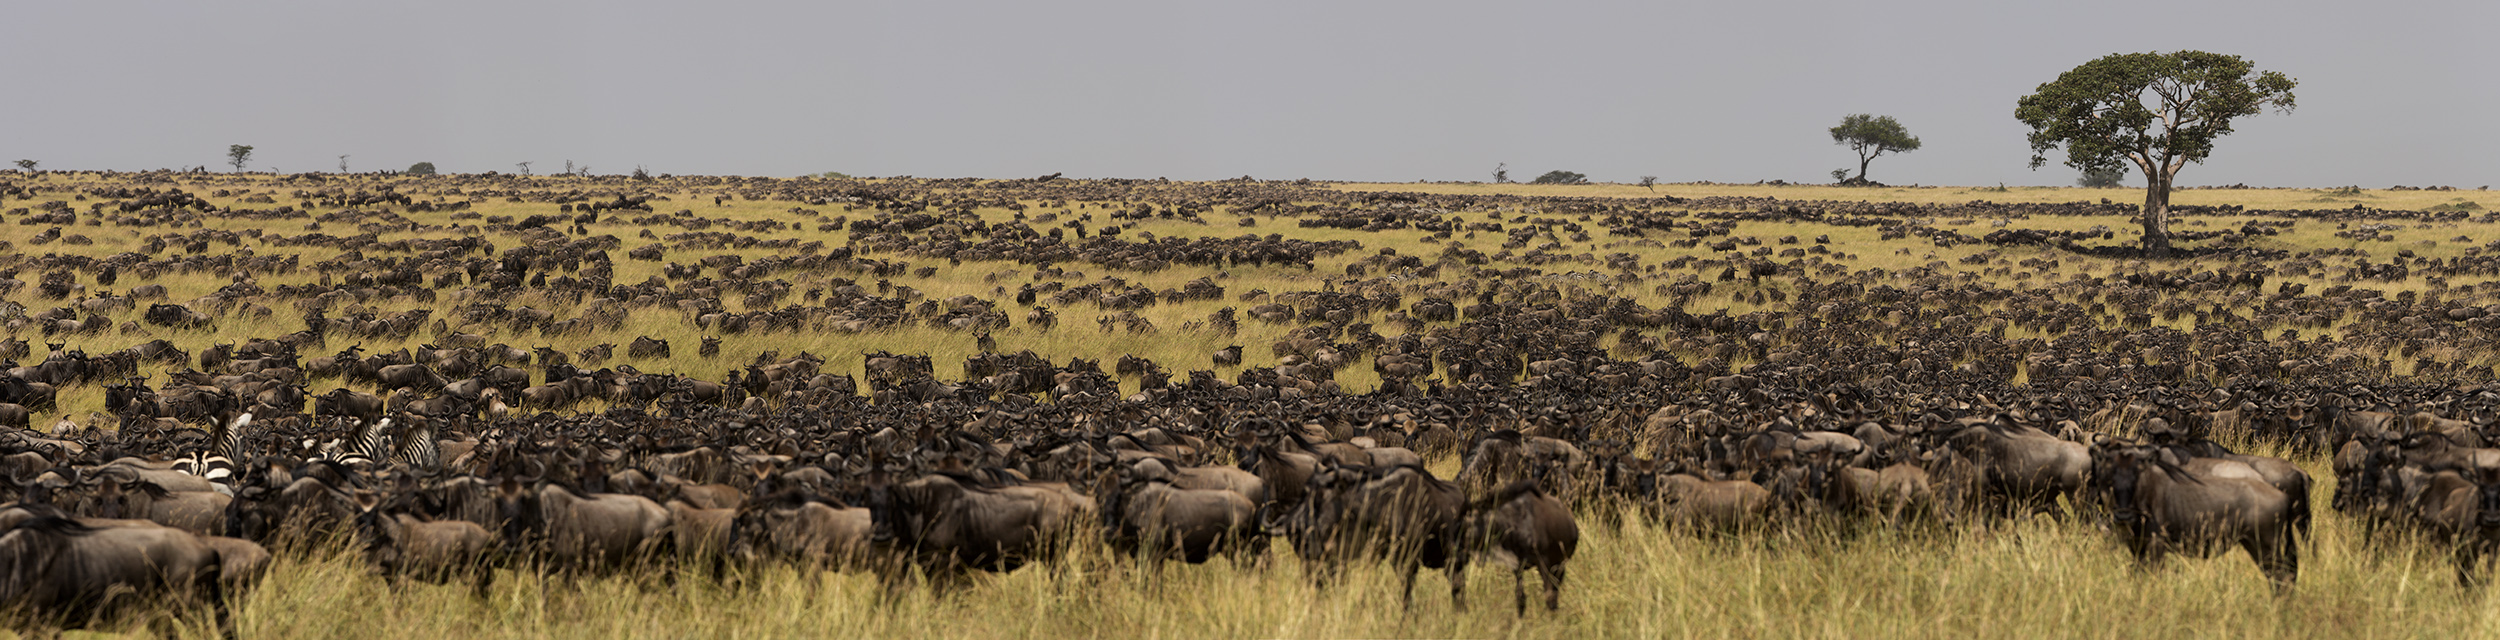 Wildebeest herd during the great migration in the Maasai Mara